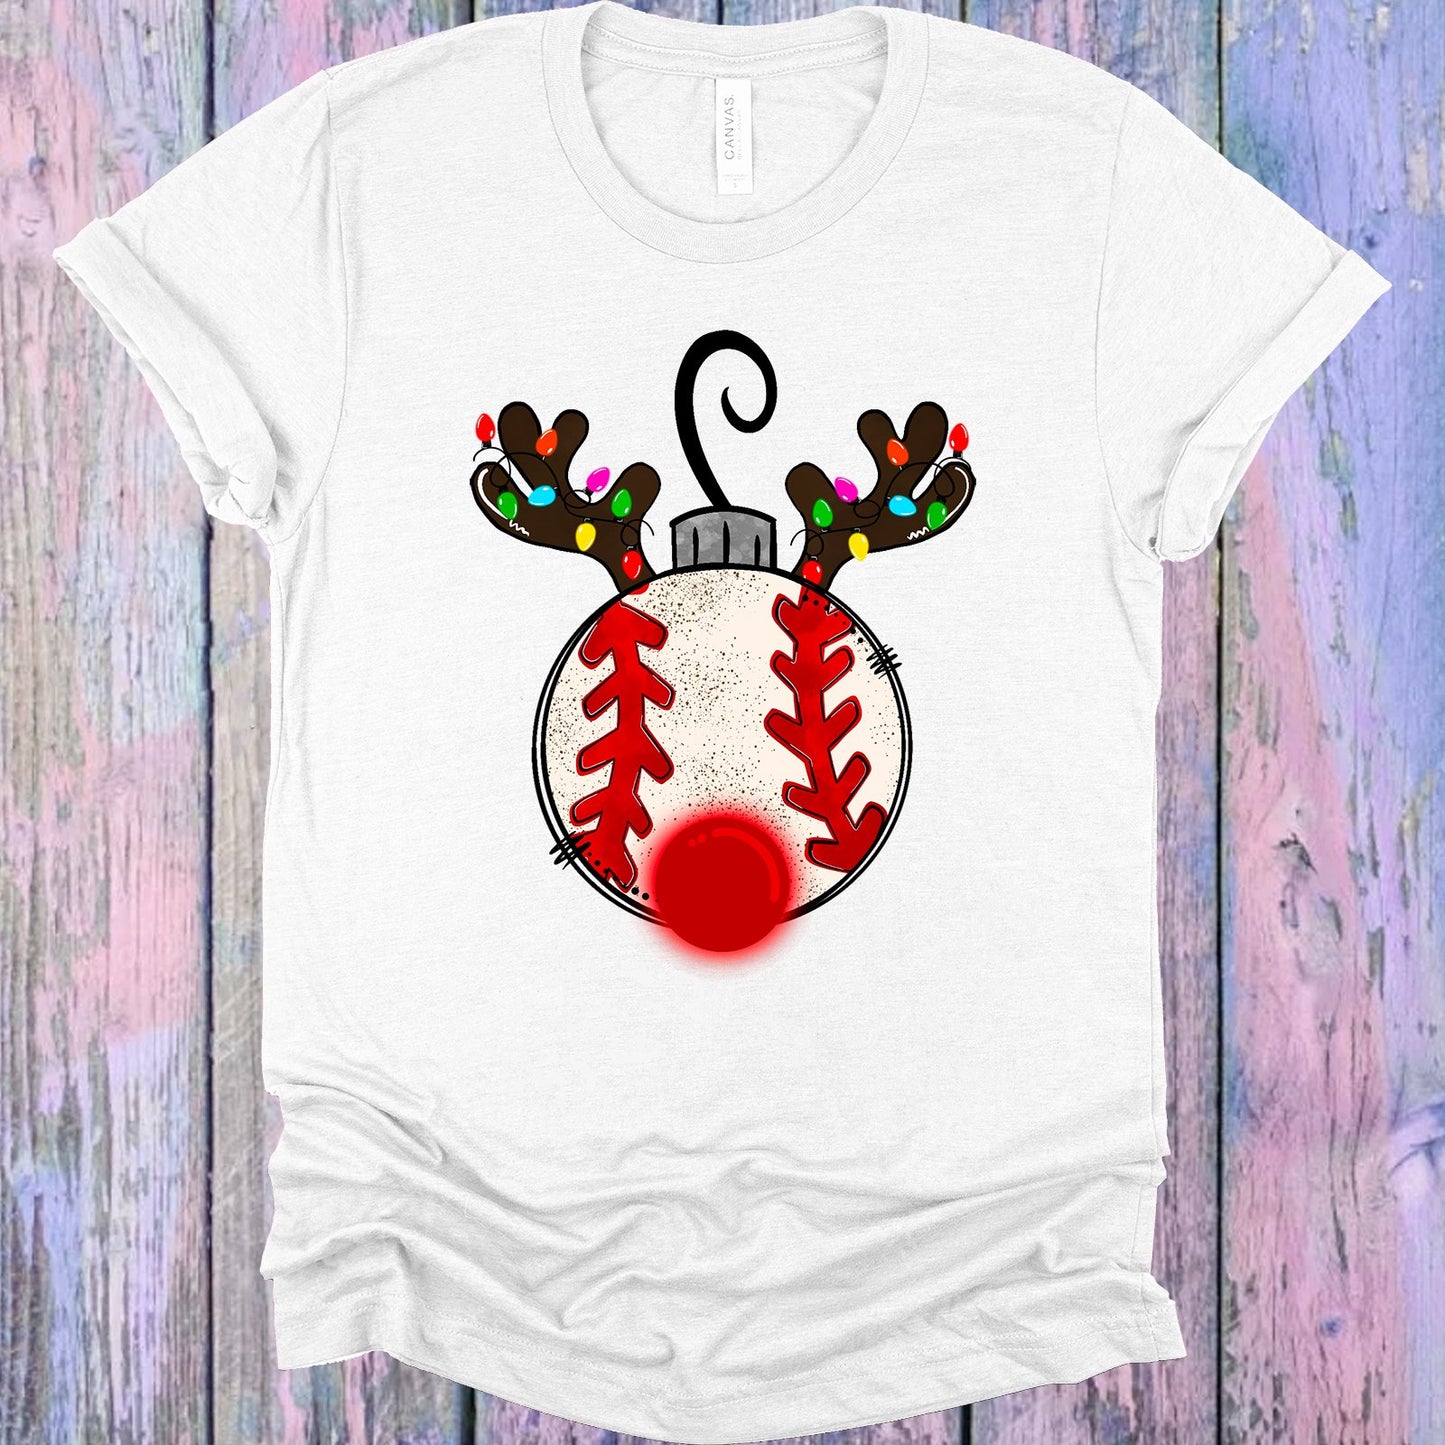 Baseball Reindeer Graphic Tee Graphic Tee